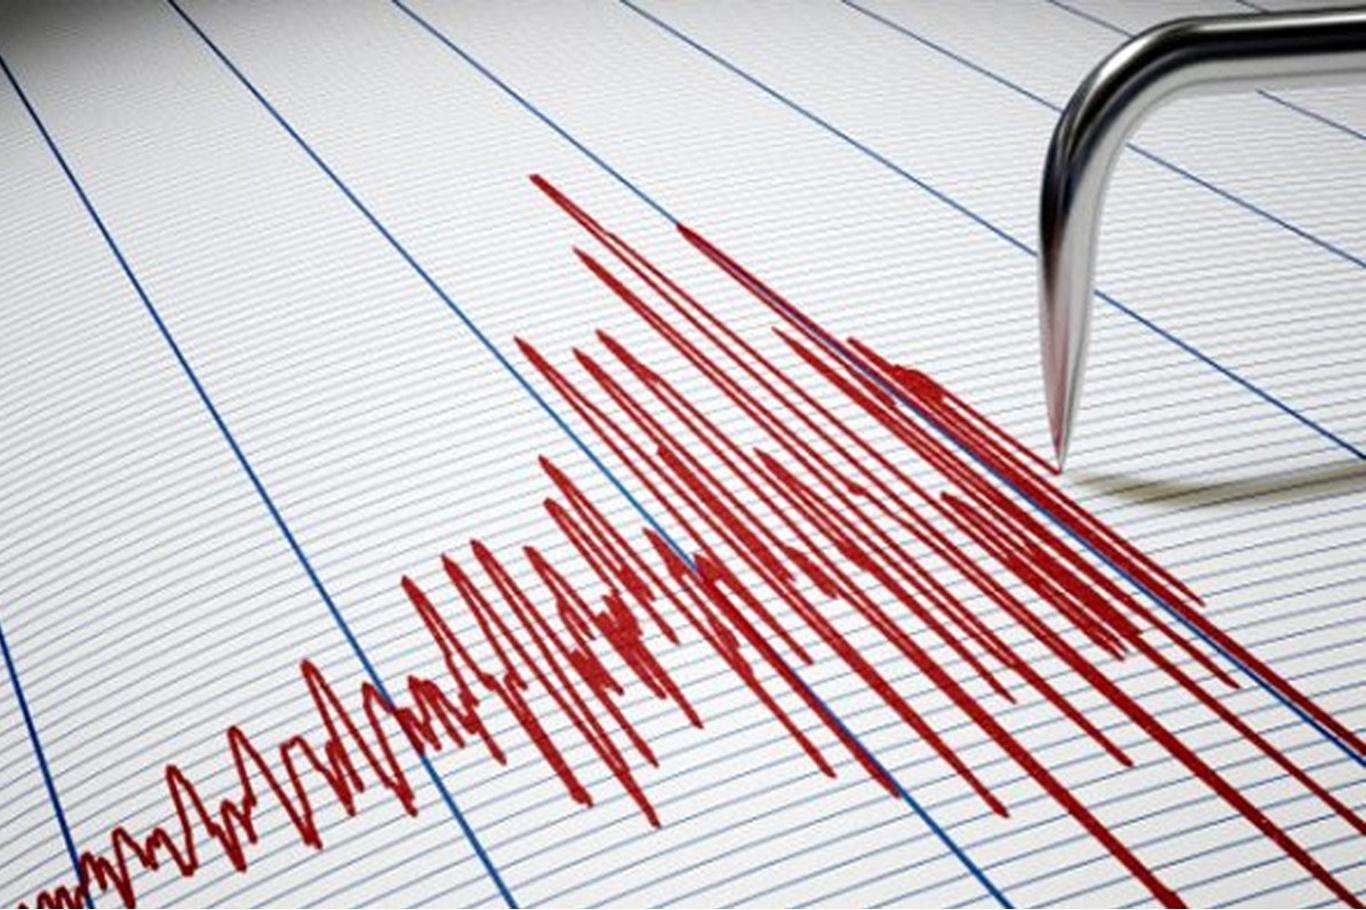 A 4.7 magnitude earthquake hits eastern Turkey